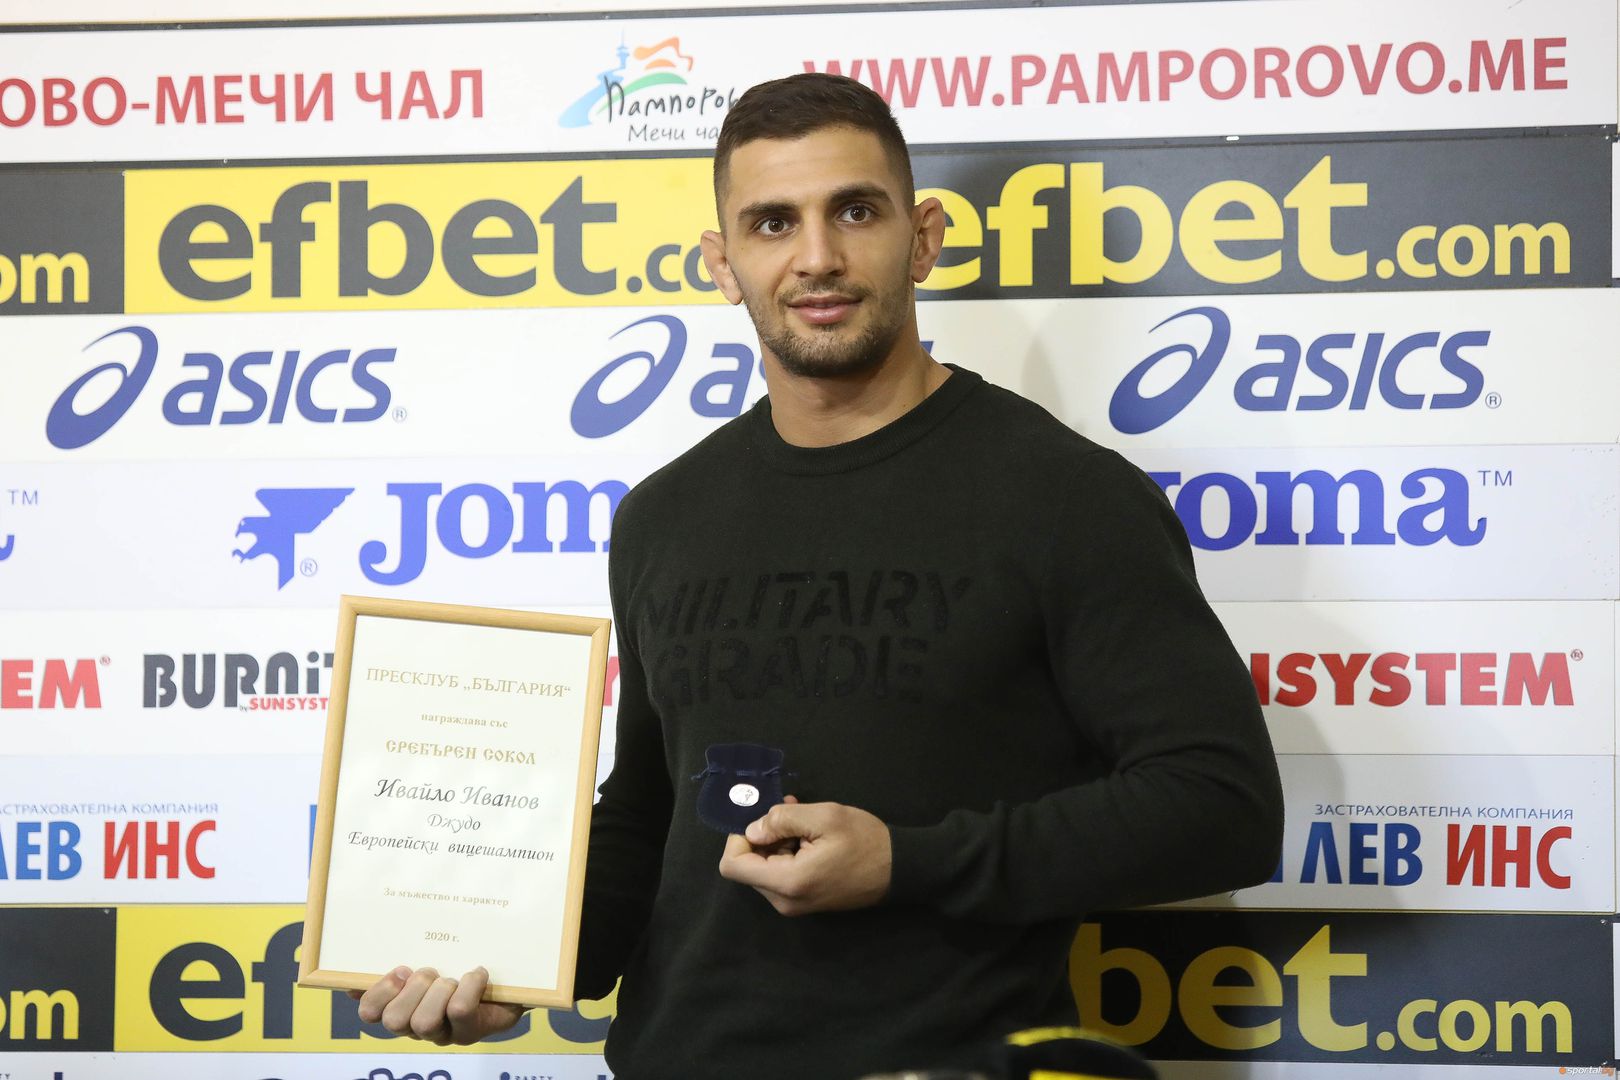 Атанас Герчев е треньор номер едно на месец ноември и Ивайло Иванов с приз "Сребърен сокол"